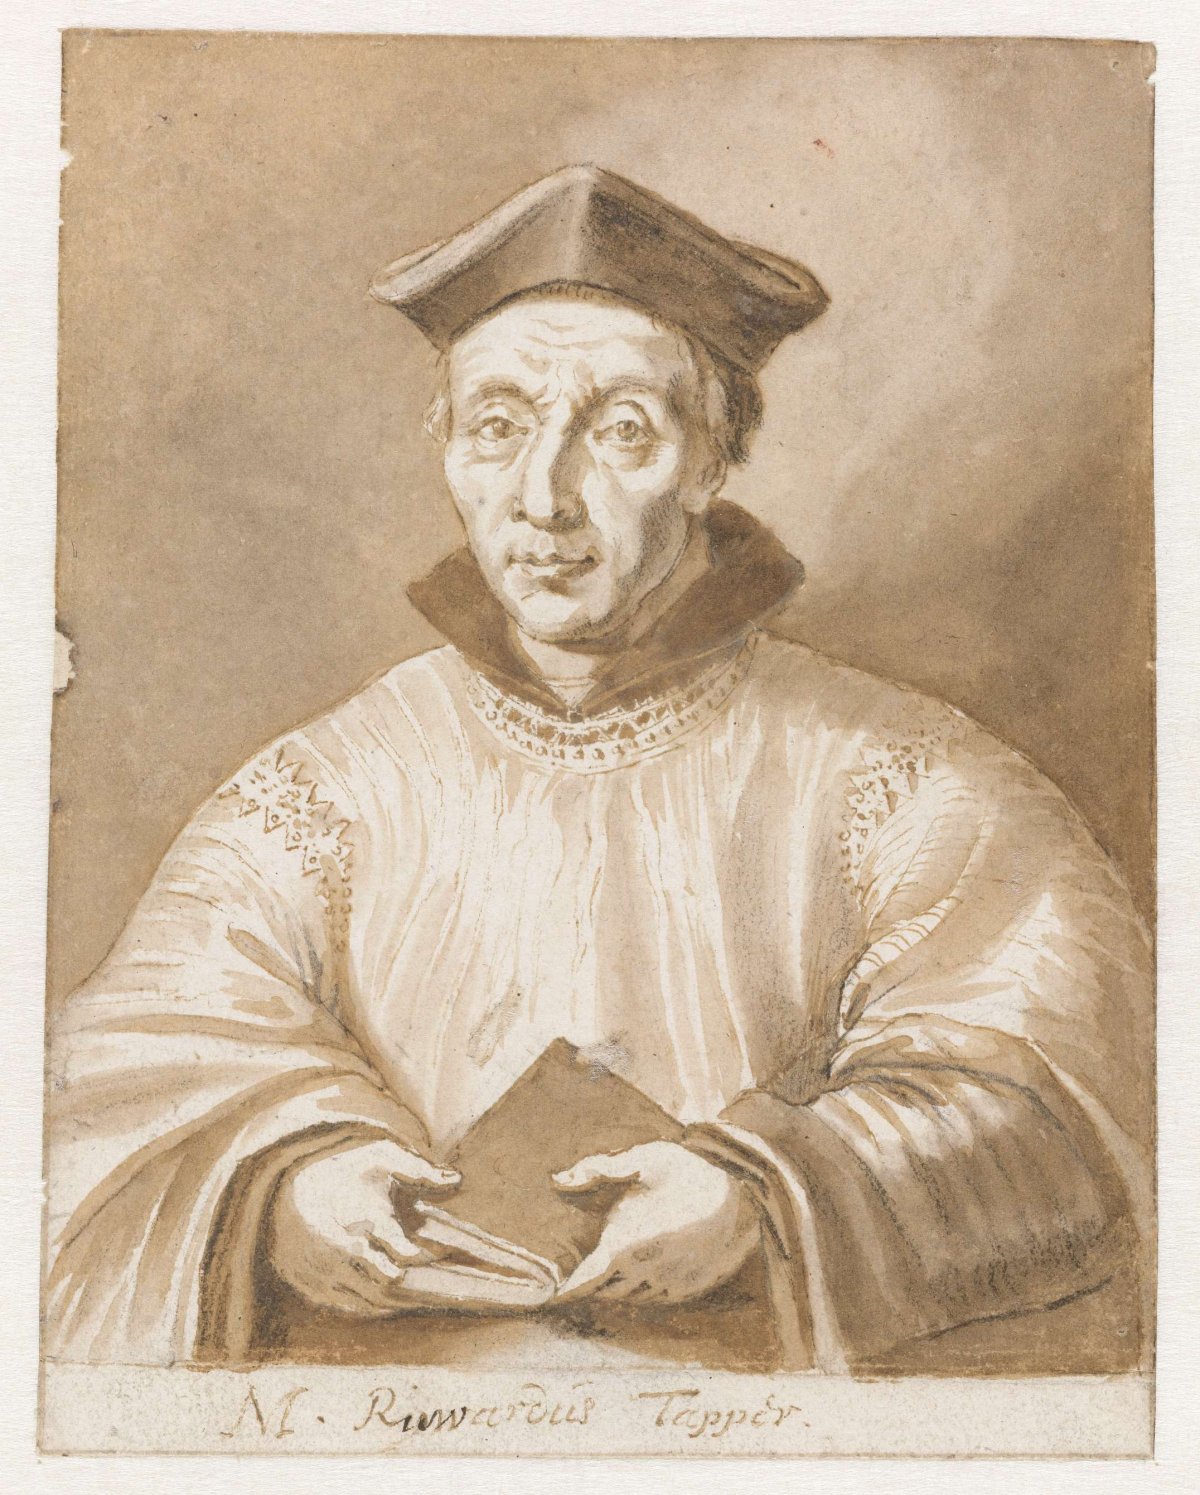 Portrait of Ruardus Tapper, Jan de Bisschop, 1648 - 1671